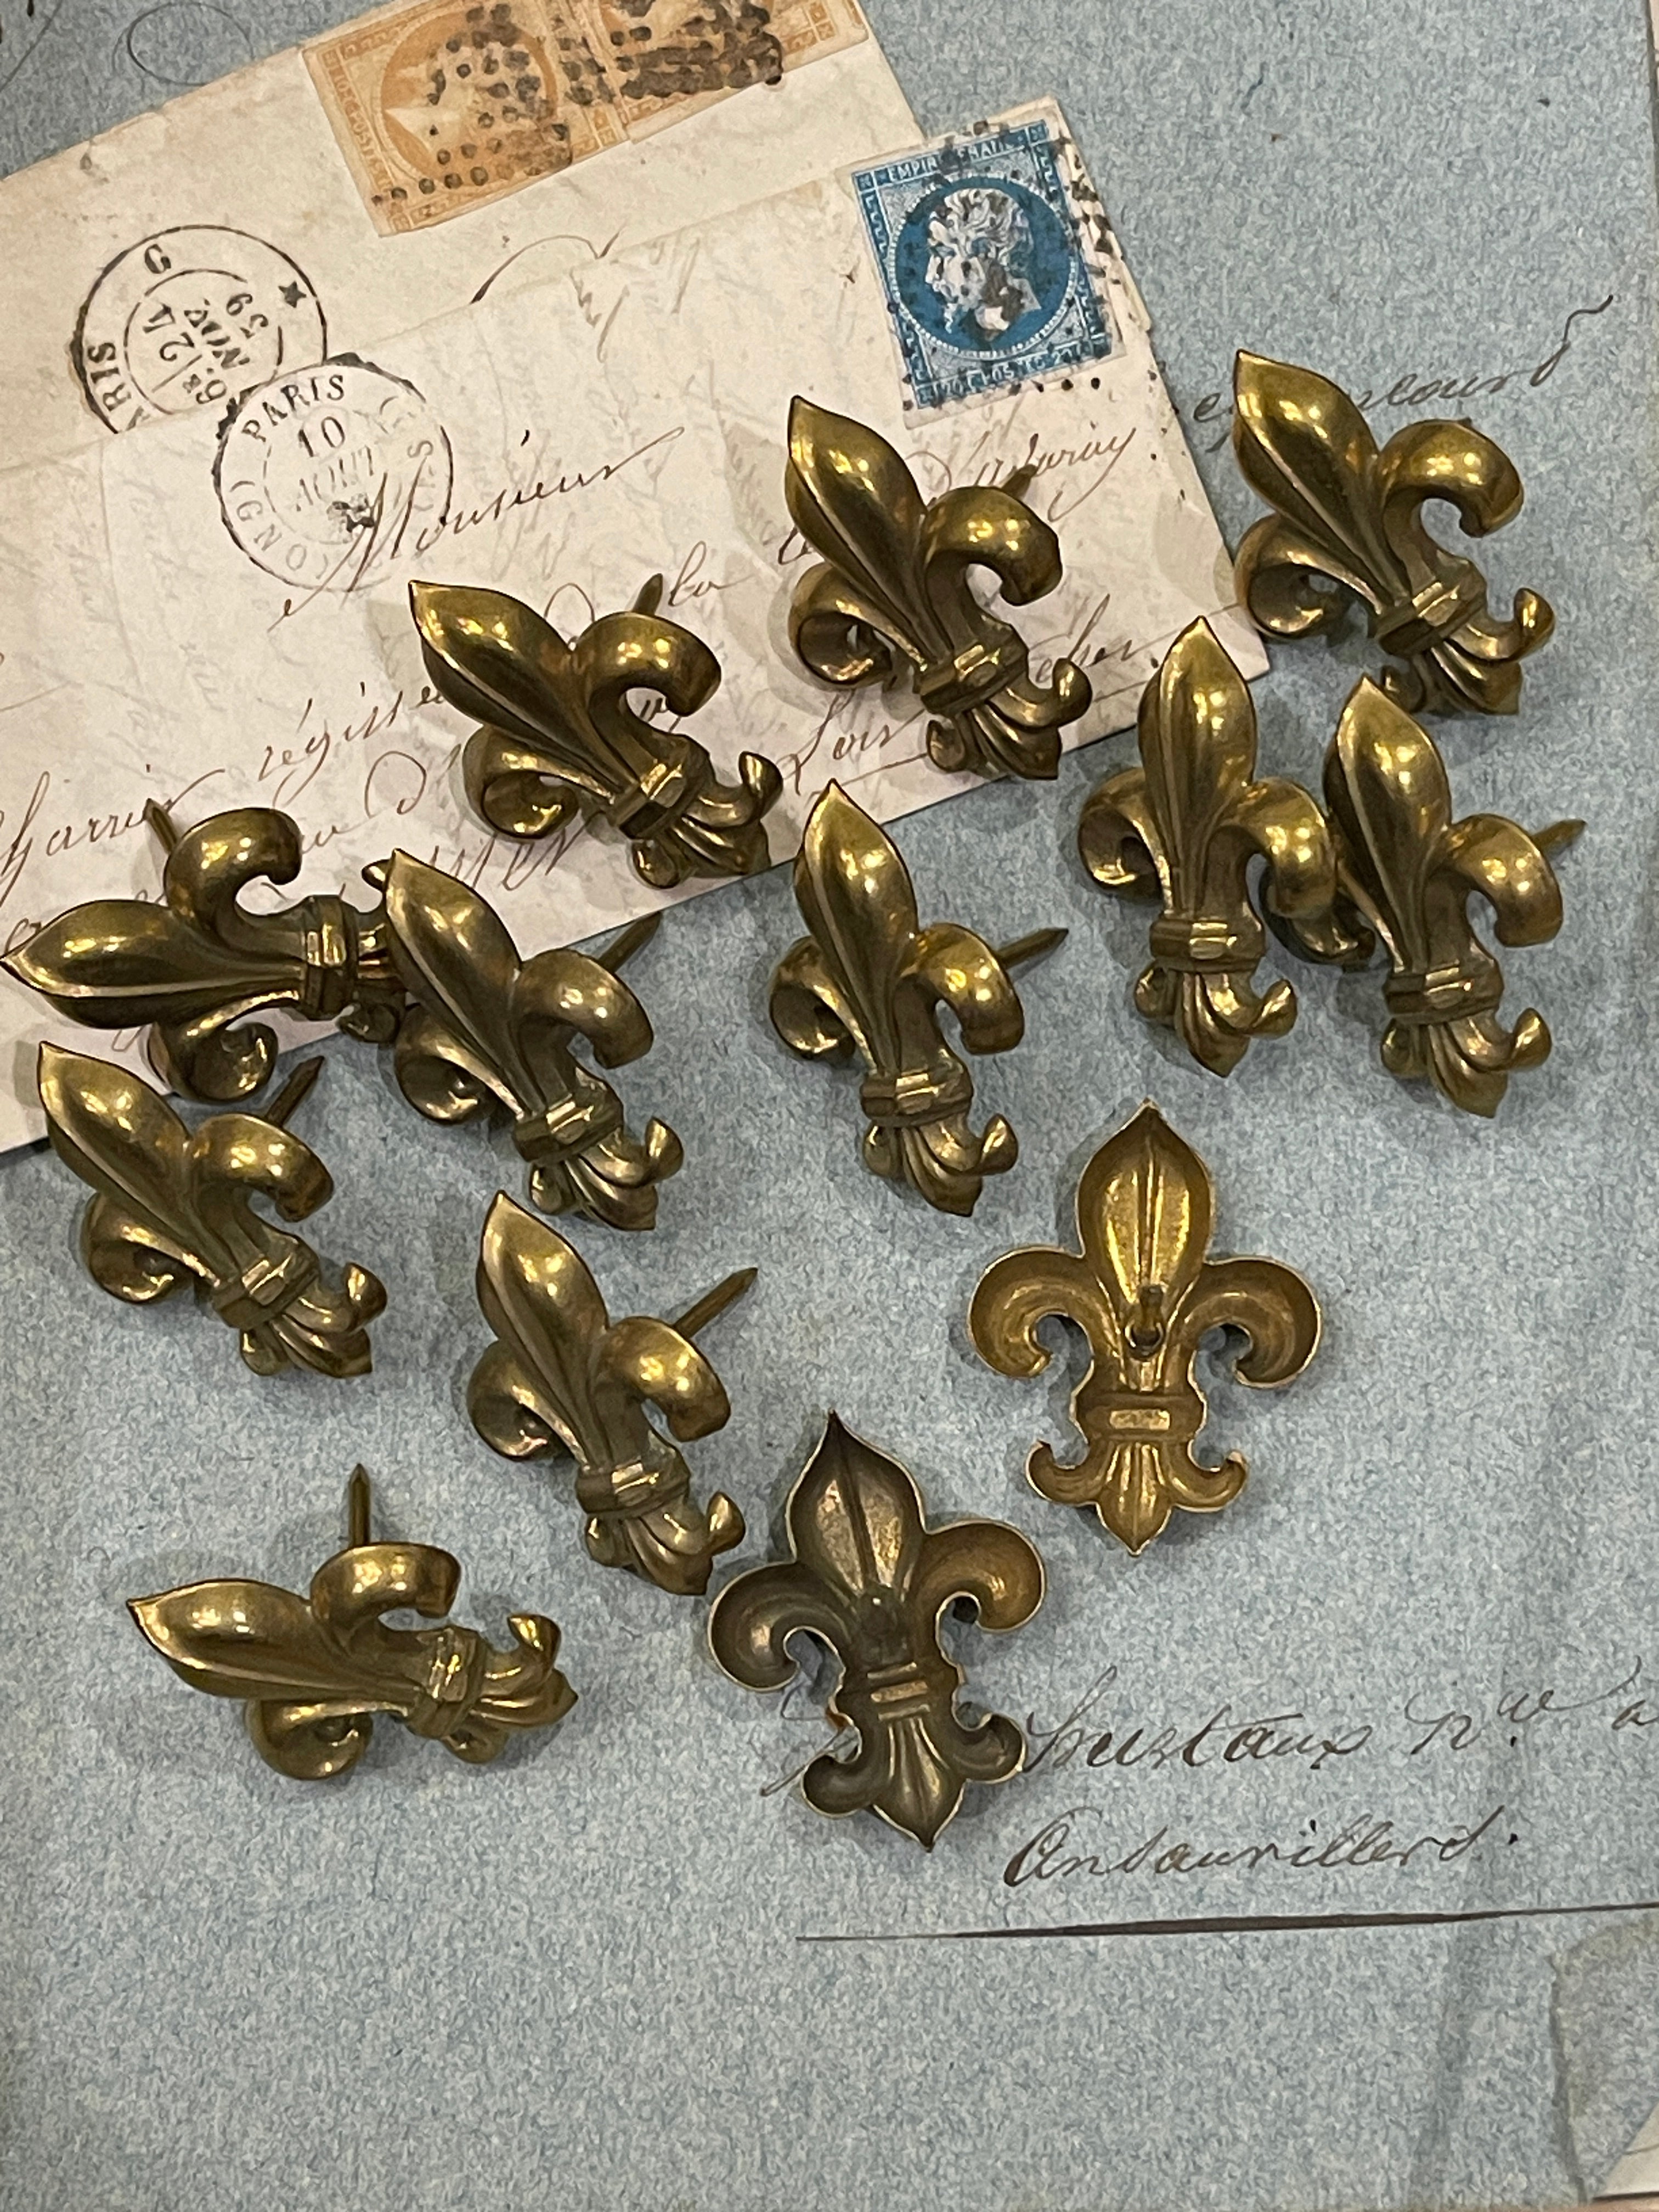 VERY RARE 1800's Antique French Fleur De Lis Upholstery Tacks